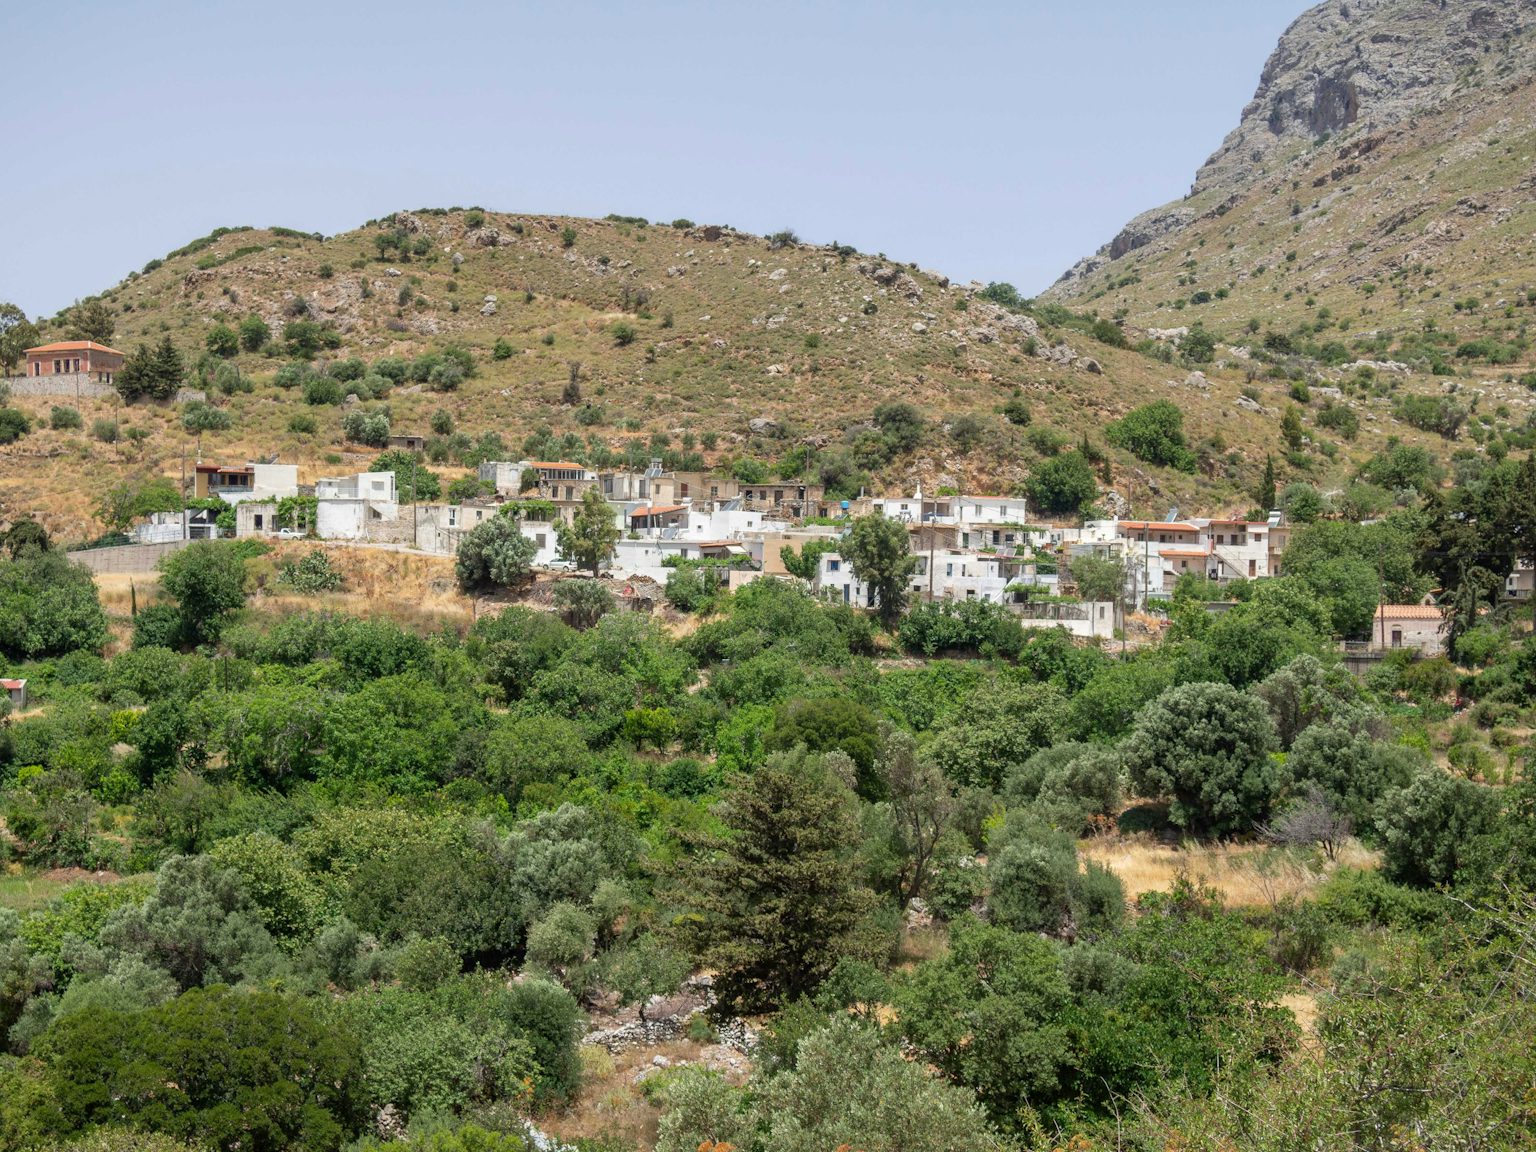 Platanes Gorge: Crete's most challenging